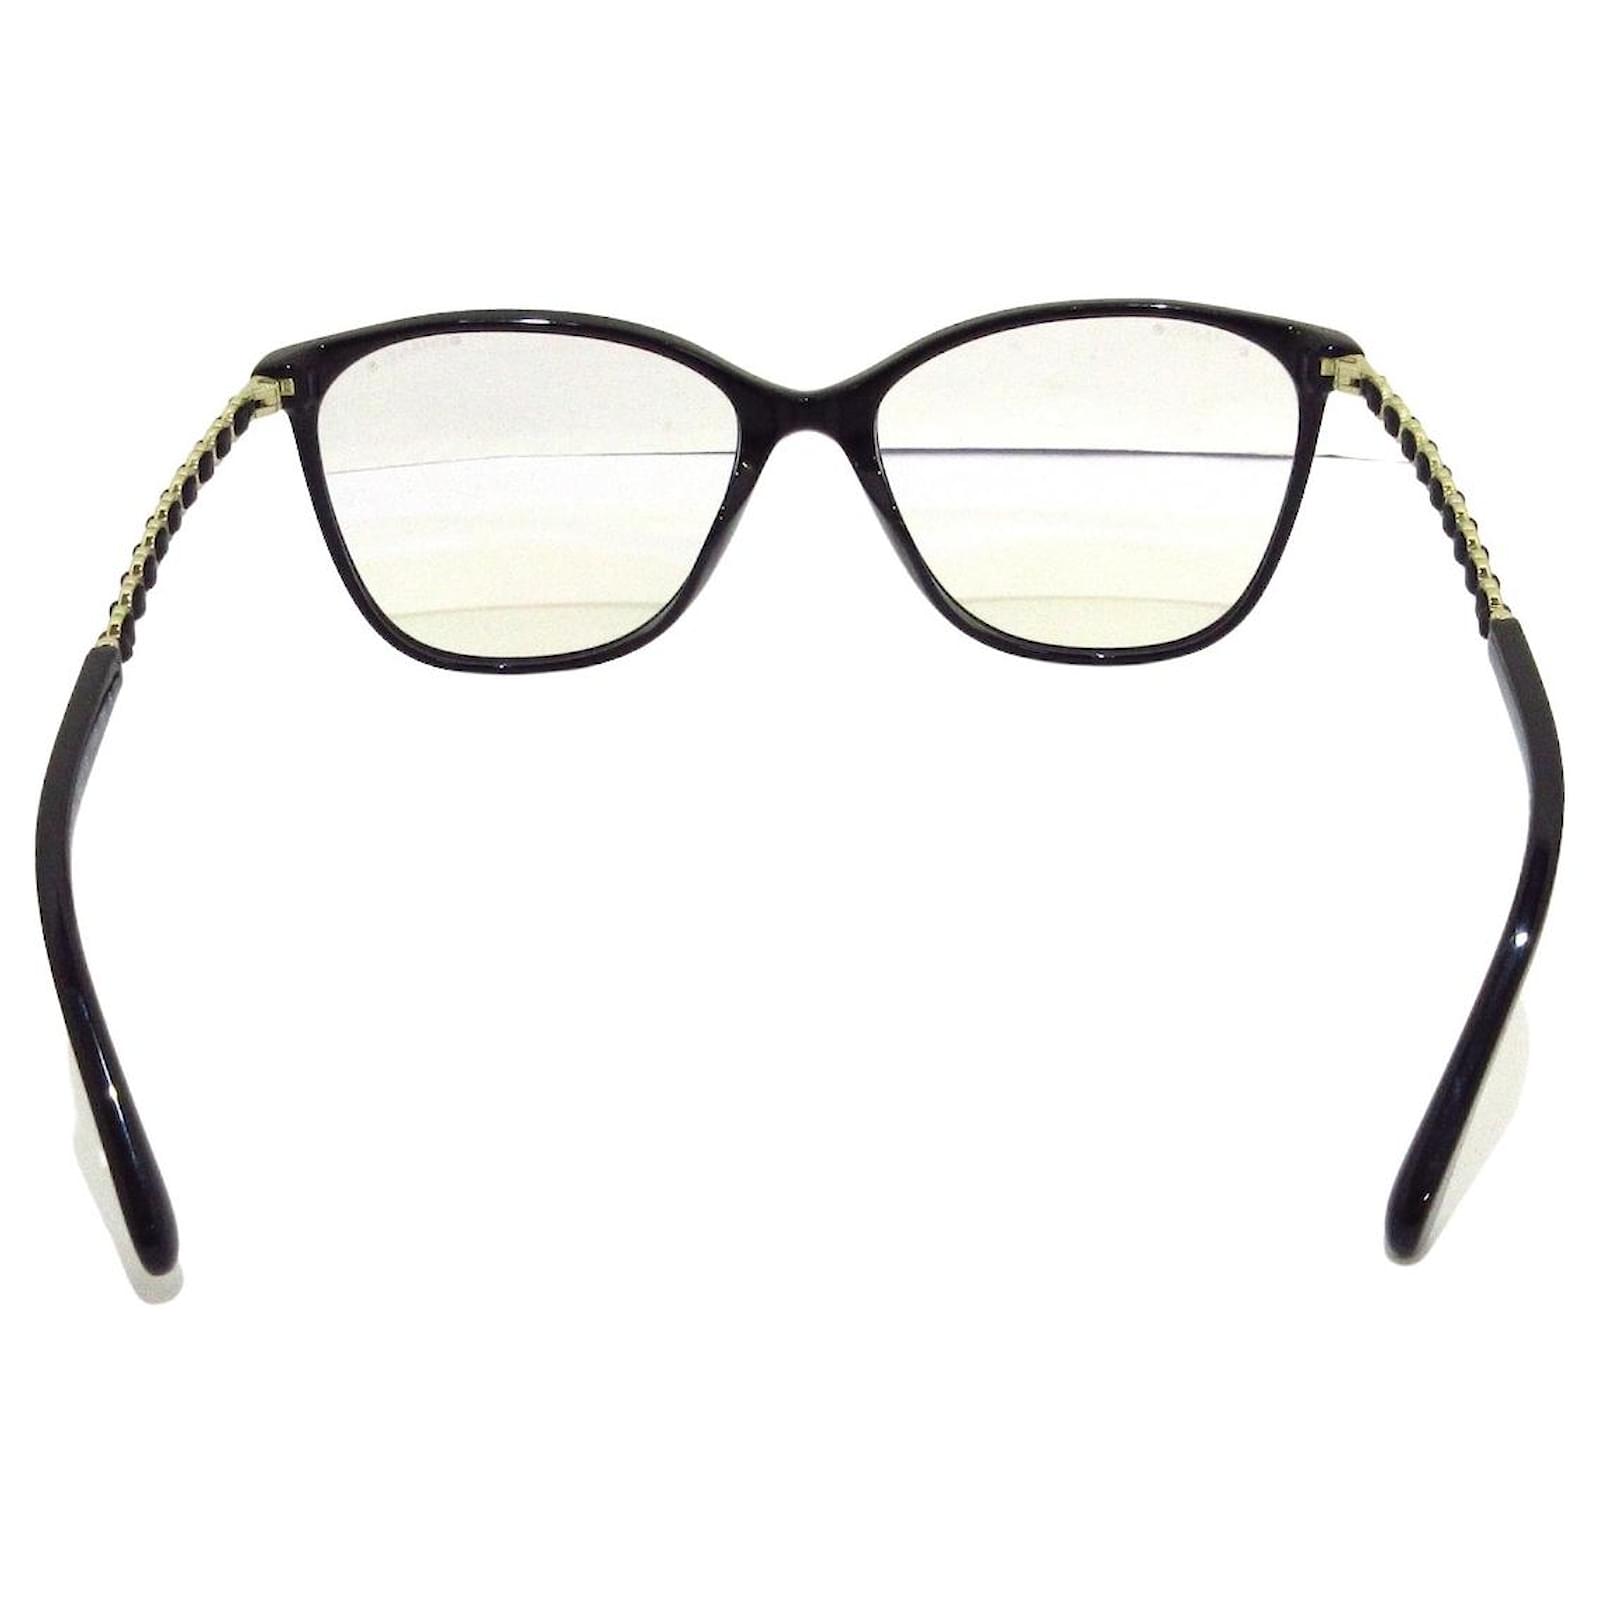 Chanel 3408Q 1663 New Eyeglass Frames for Sale in Atlanta, GA - OfferUp